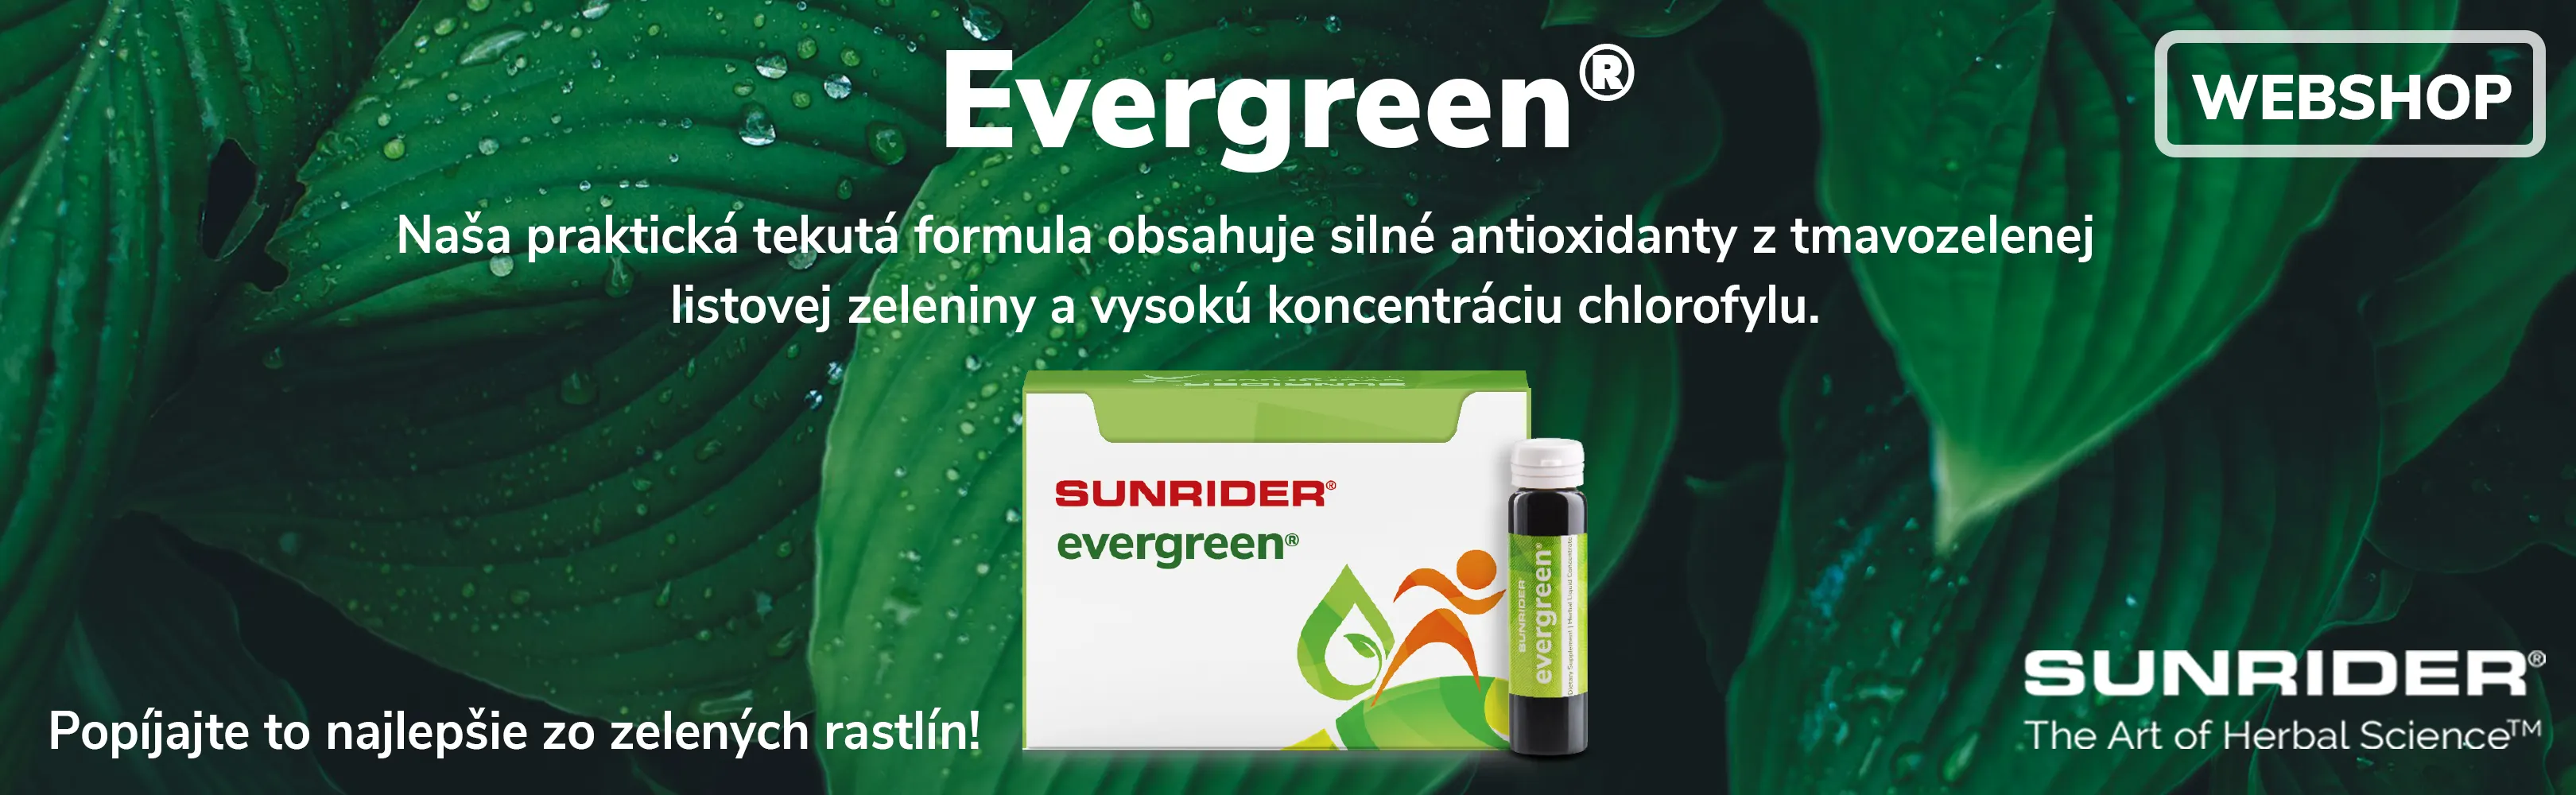 HU] Evergreen banner SK